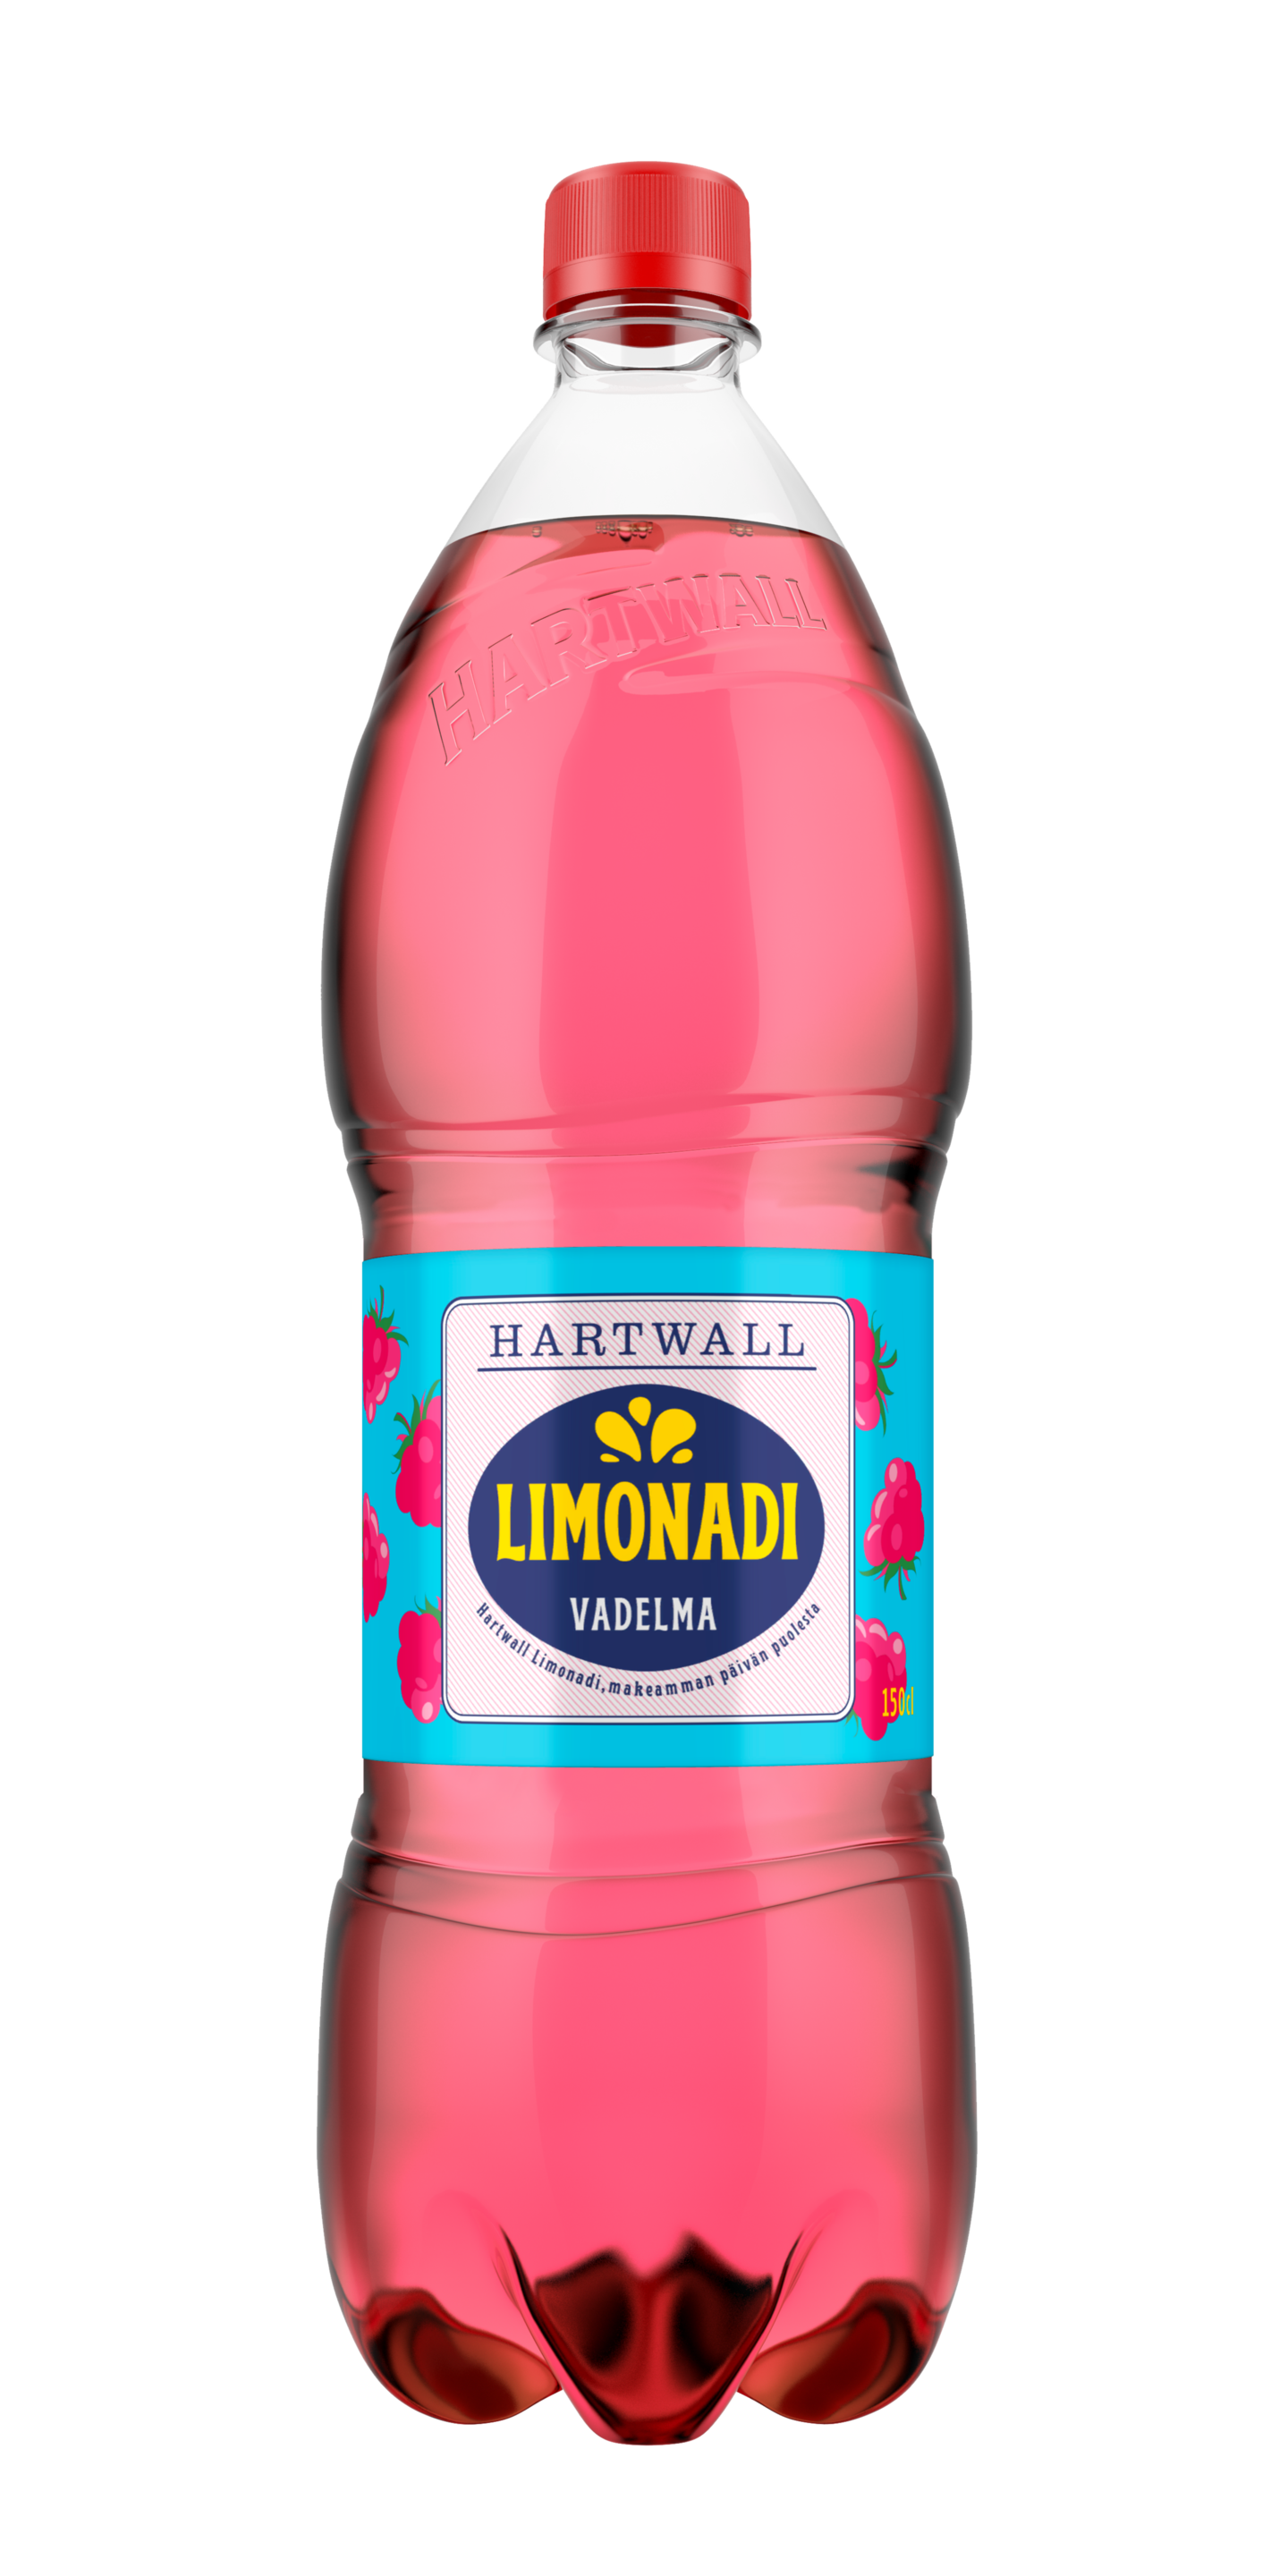 Hartwall Limonadi Vadelma 1,5l